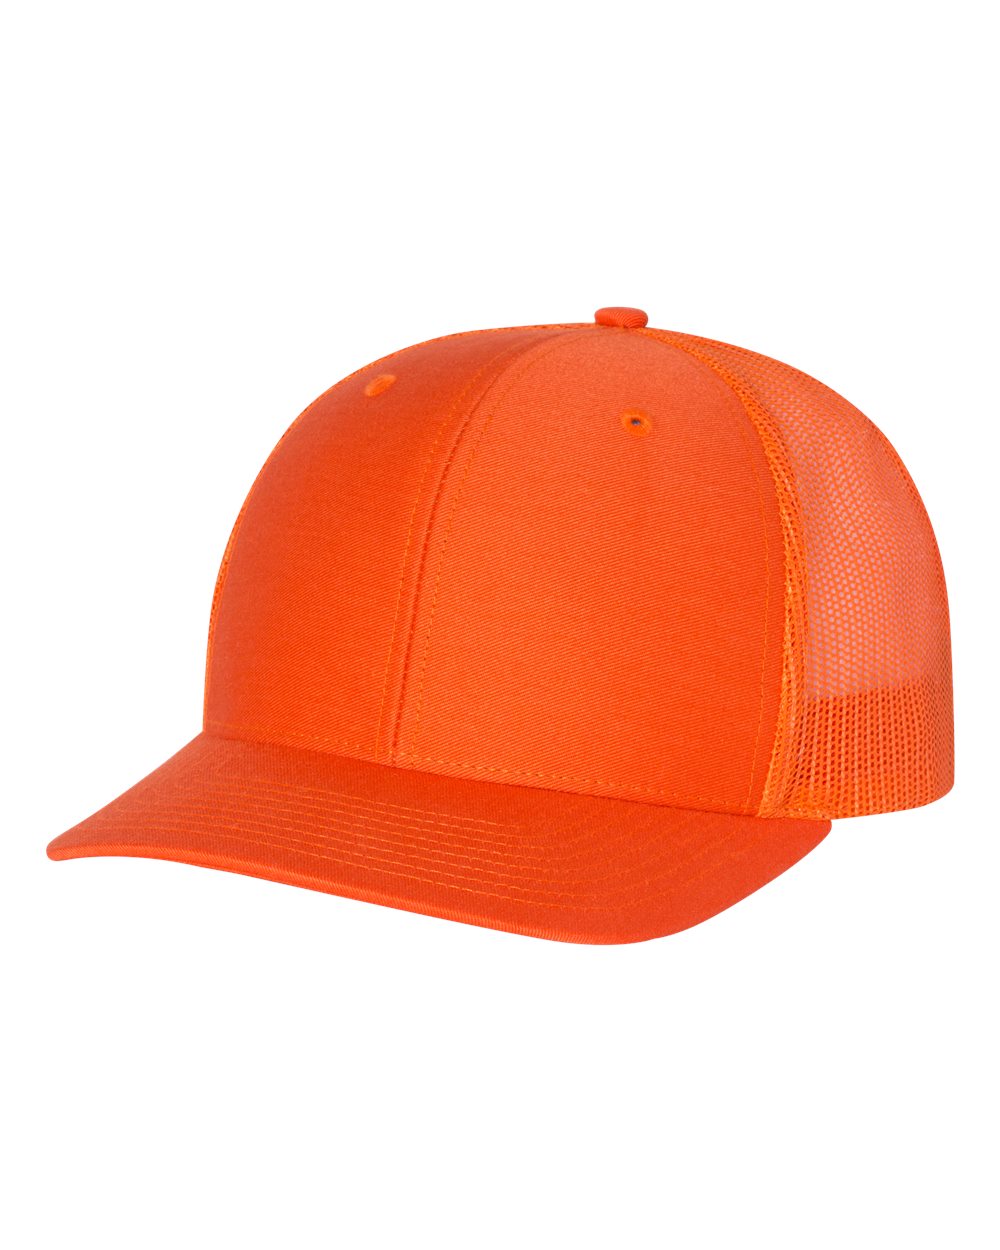 richardson cap orange